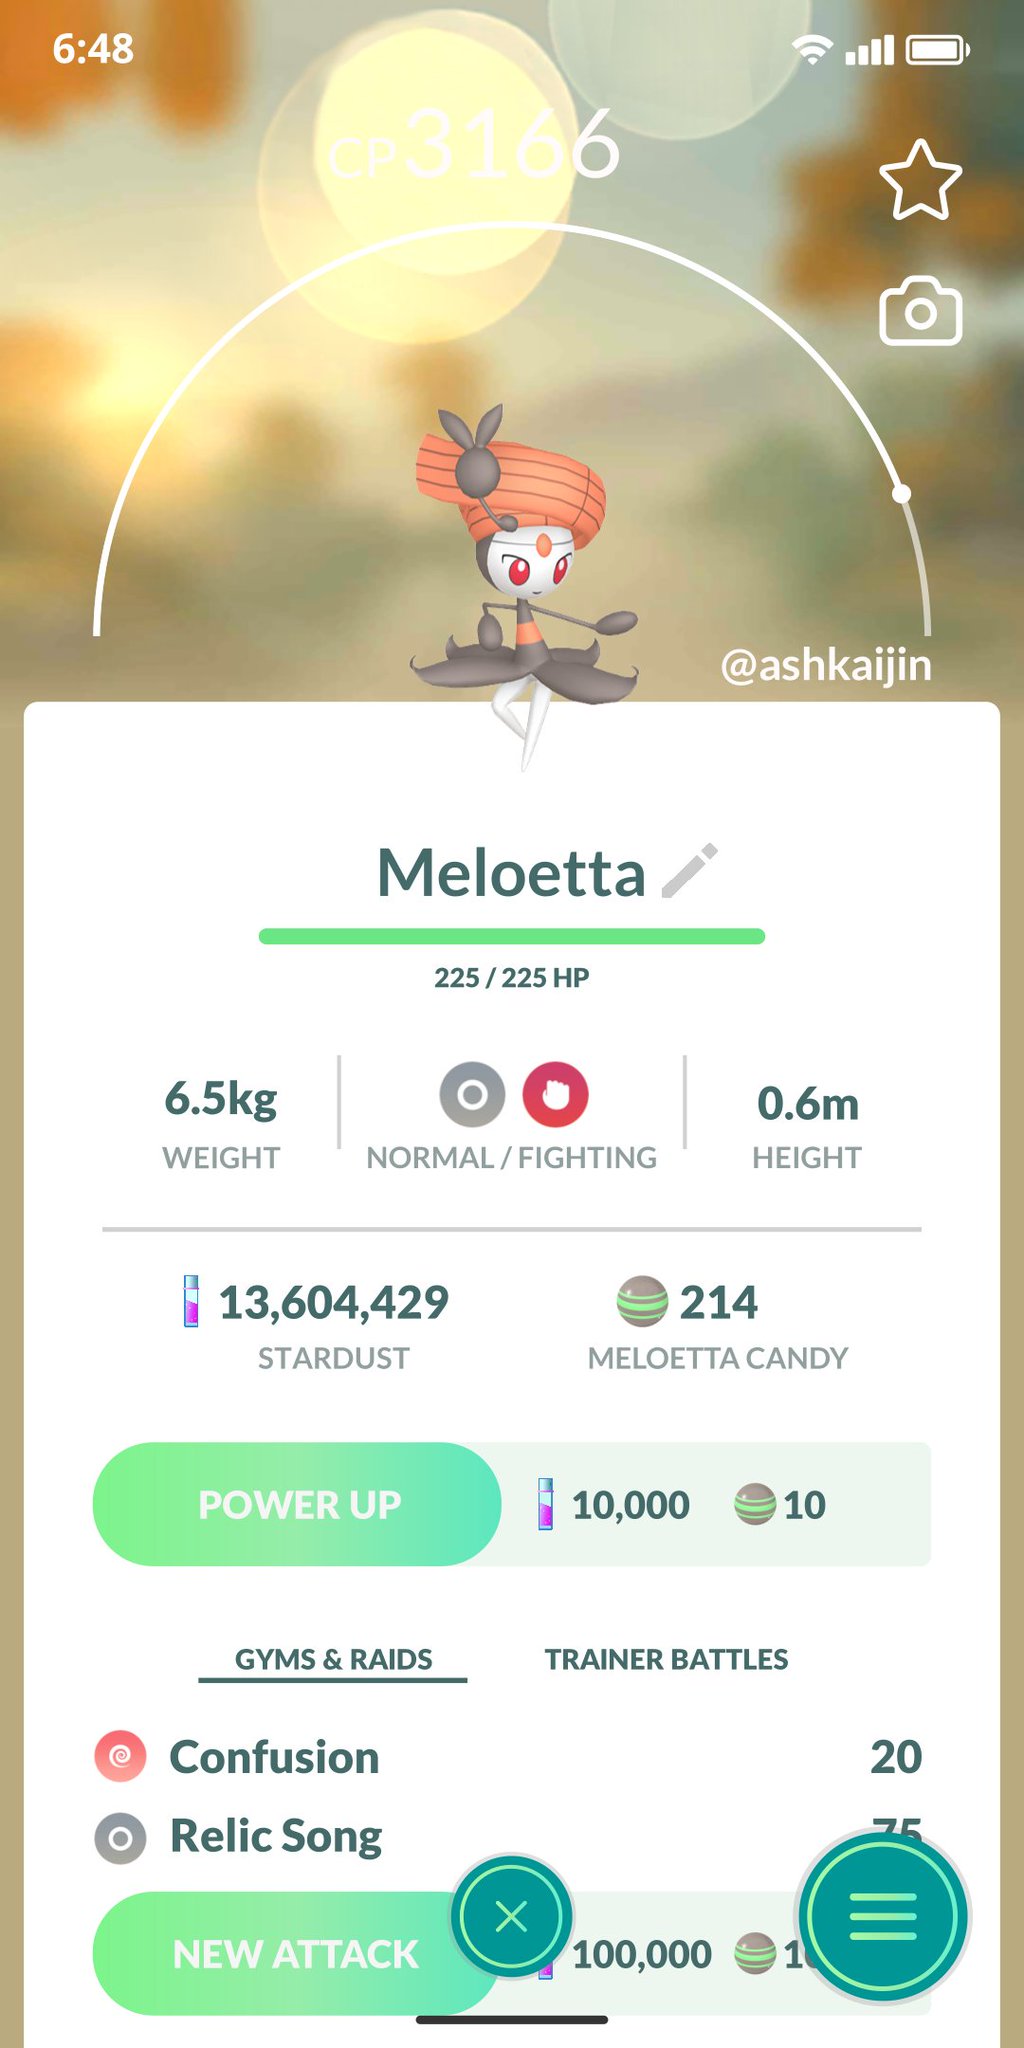 How to Get Meloetta In Pokémon Go